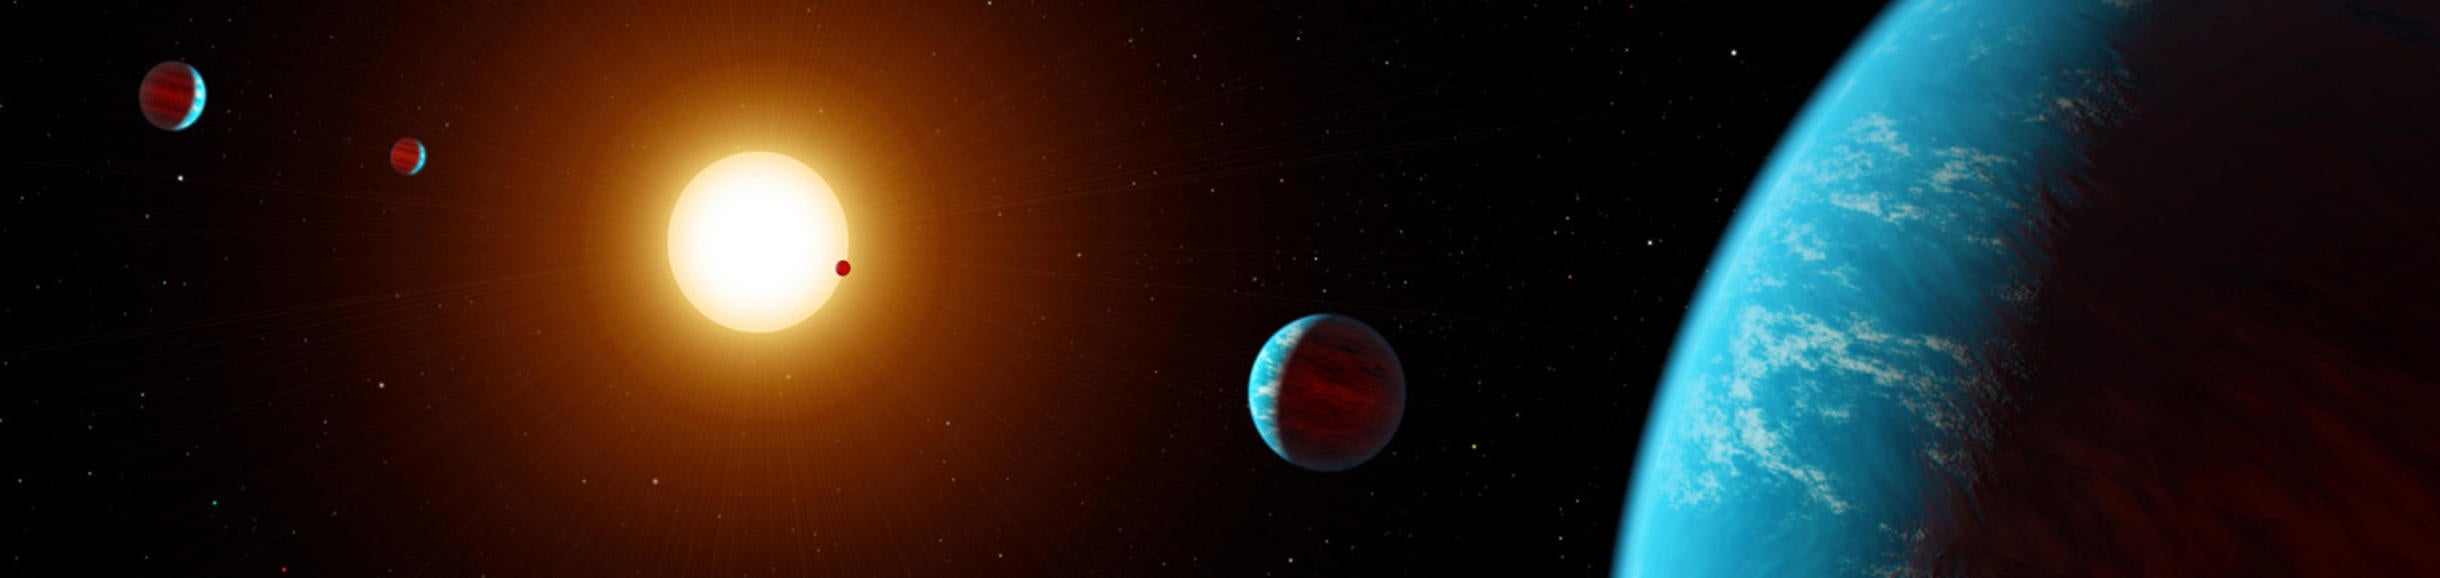 Exoplanets (c) NASA